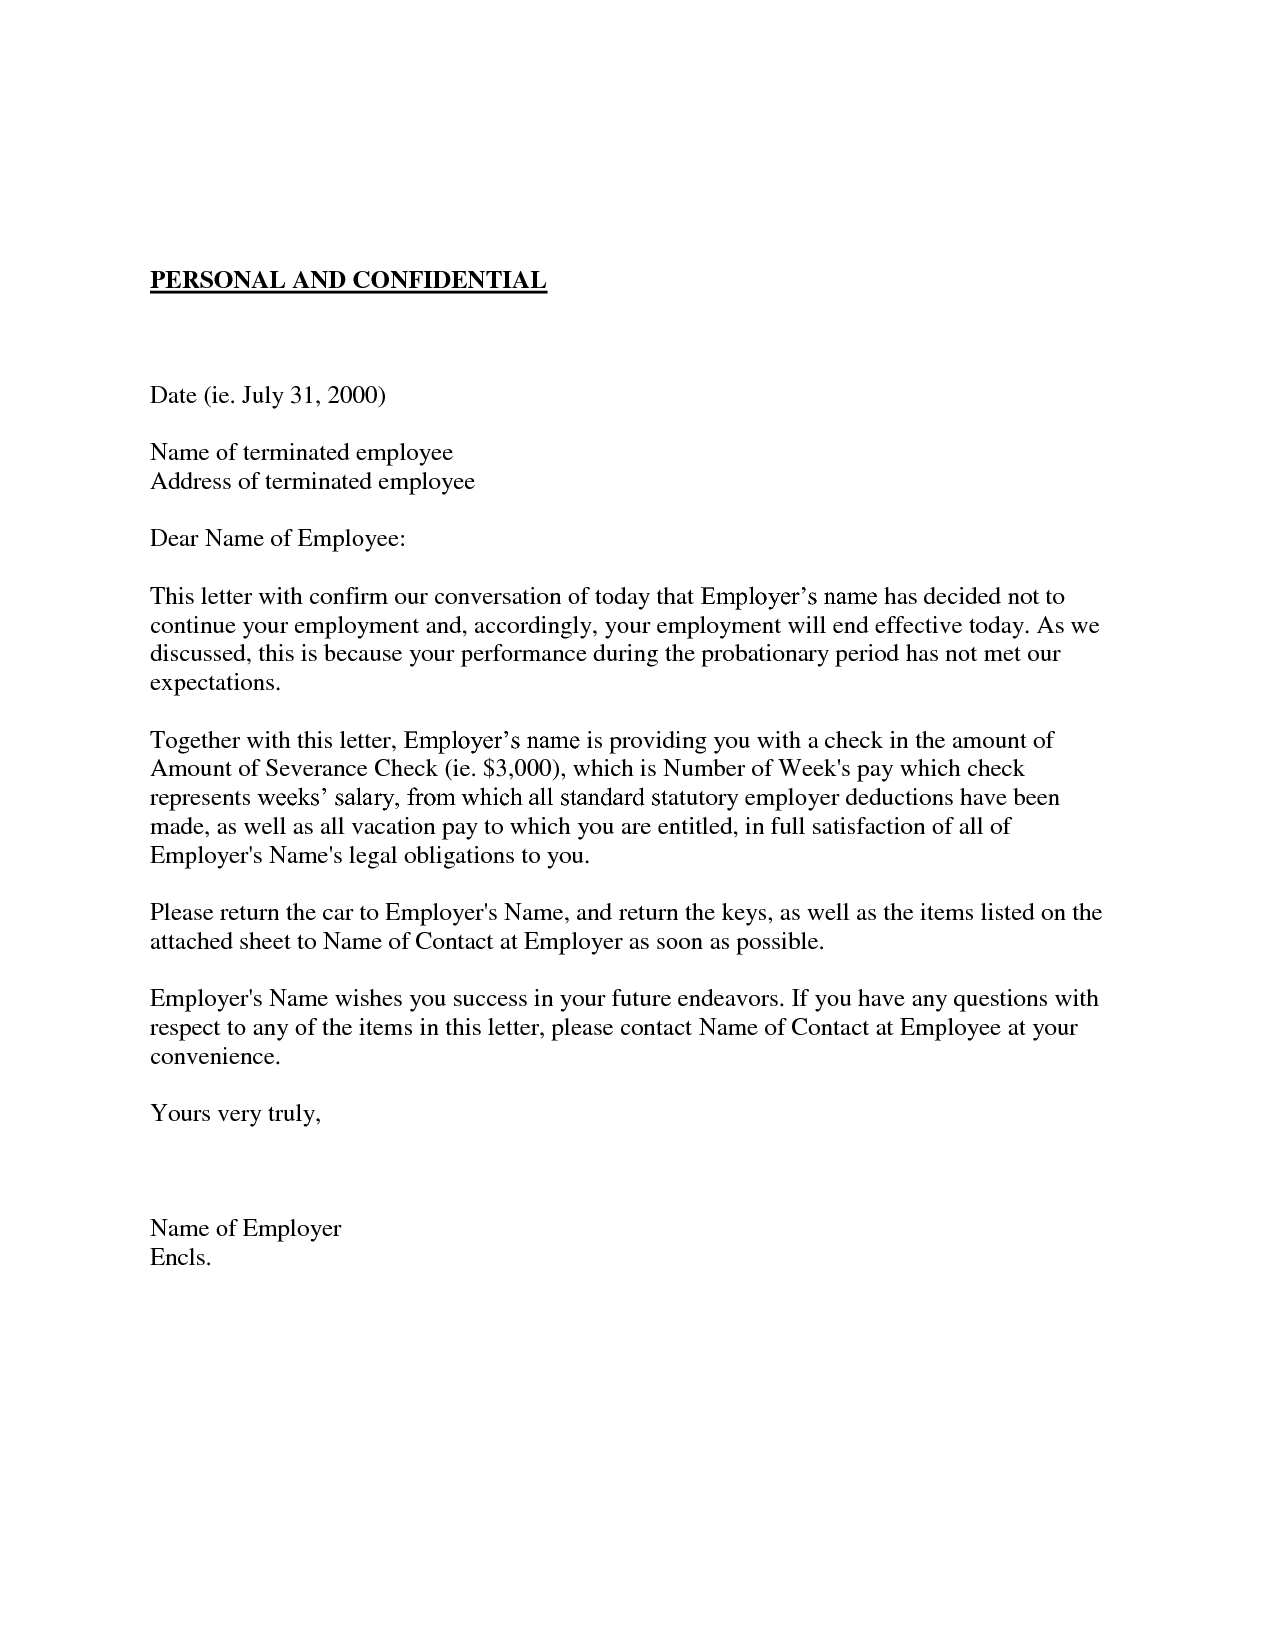 Probationary period notice resignation letter